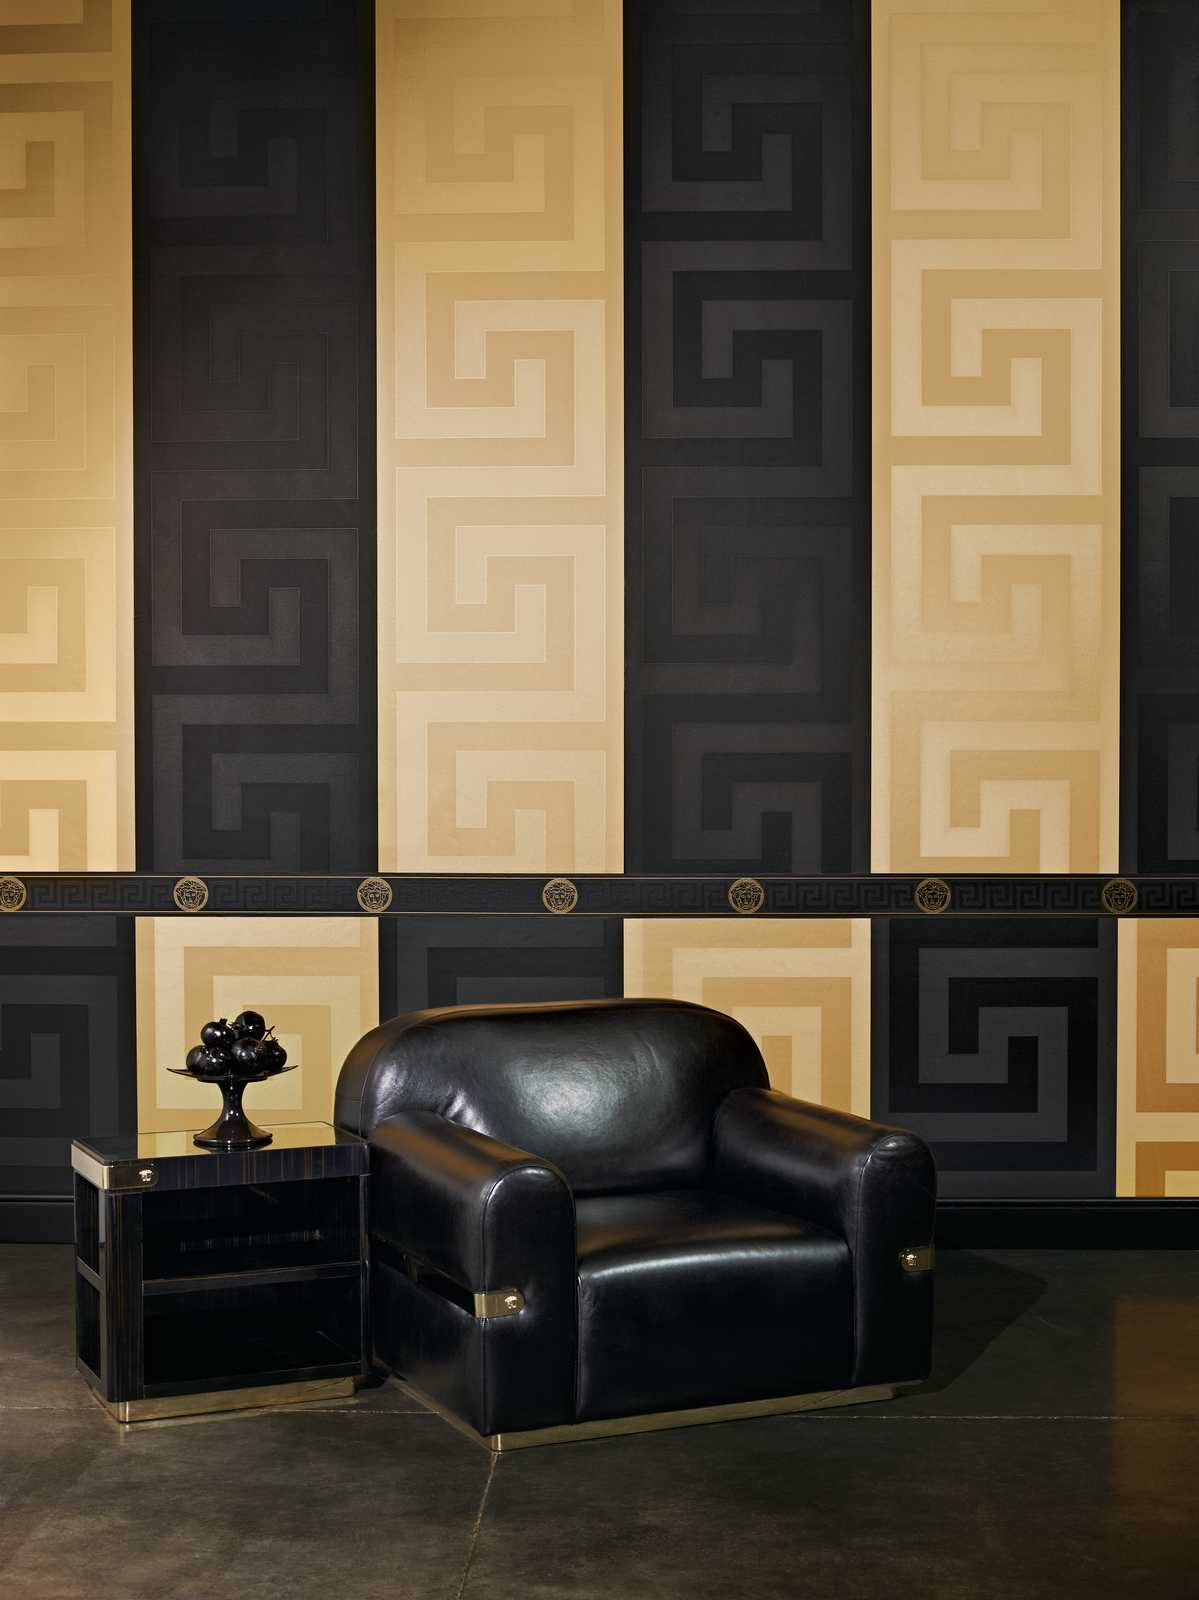             VERSACE wallpaper border Medusa motif - black
        